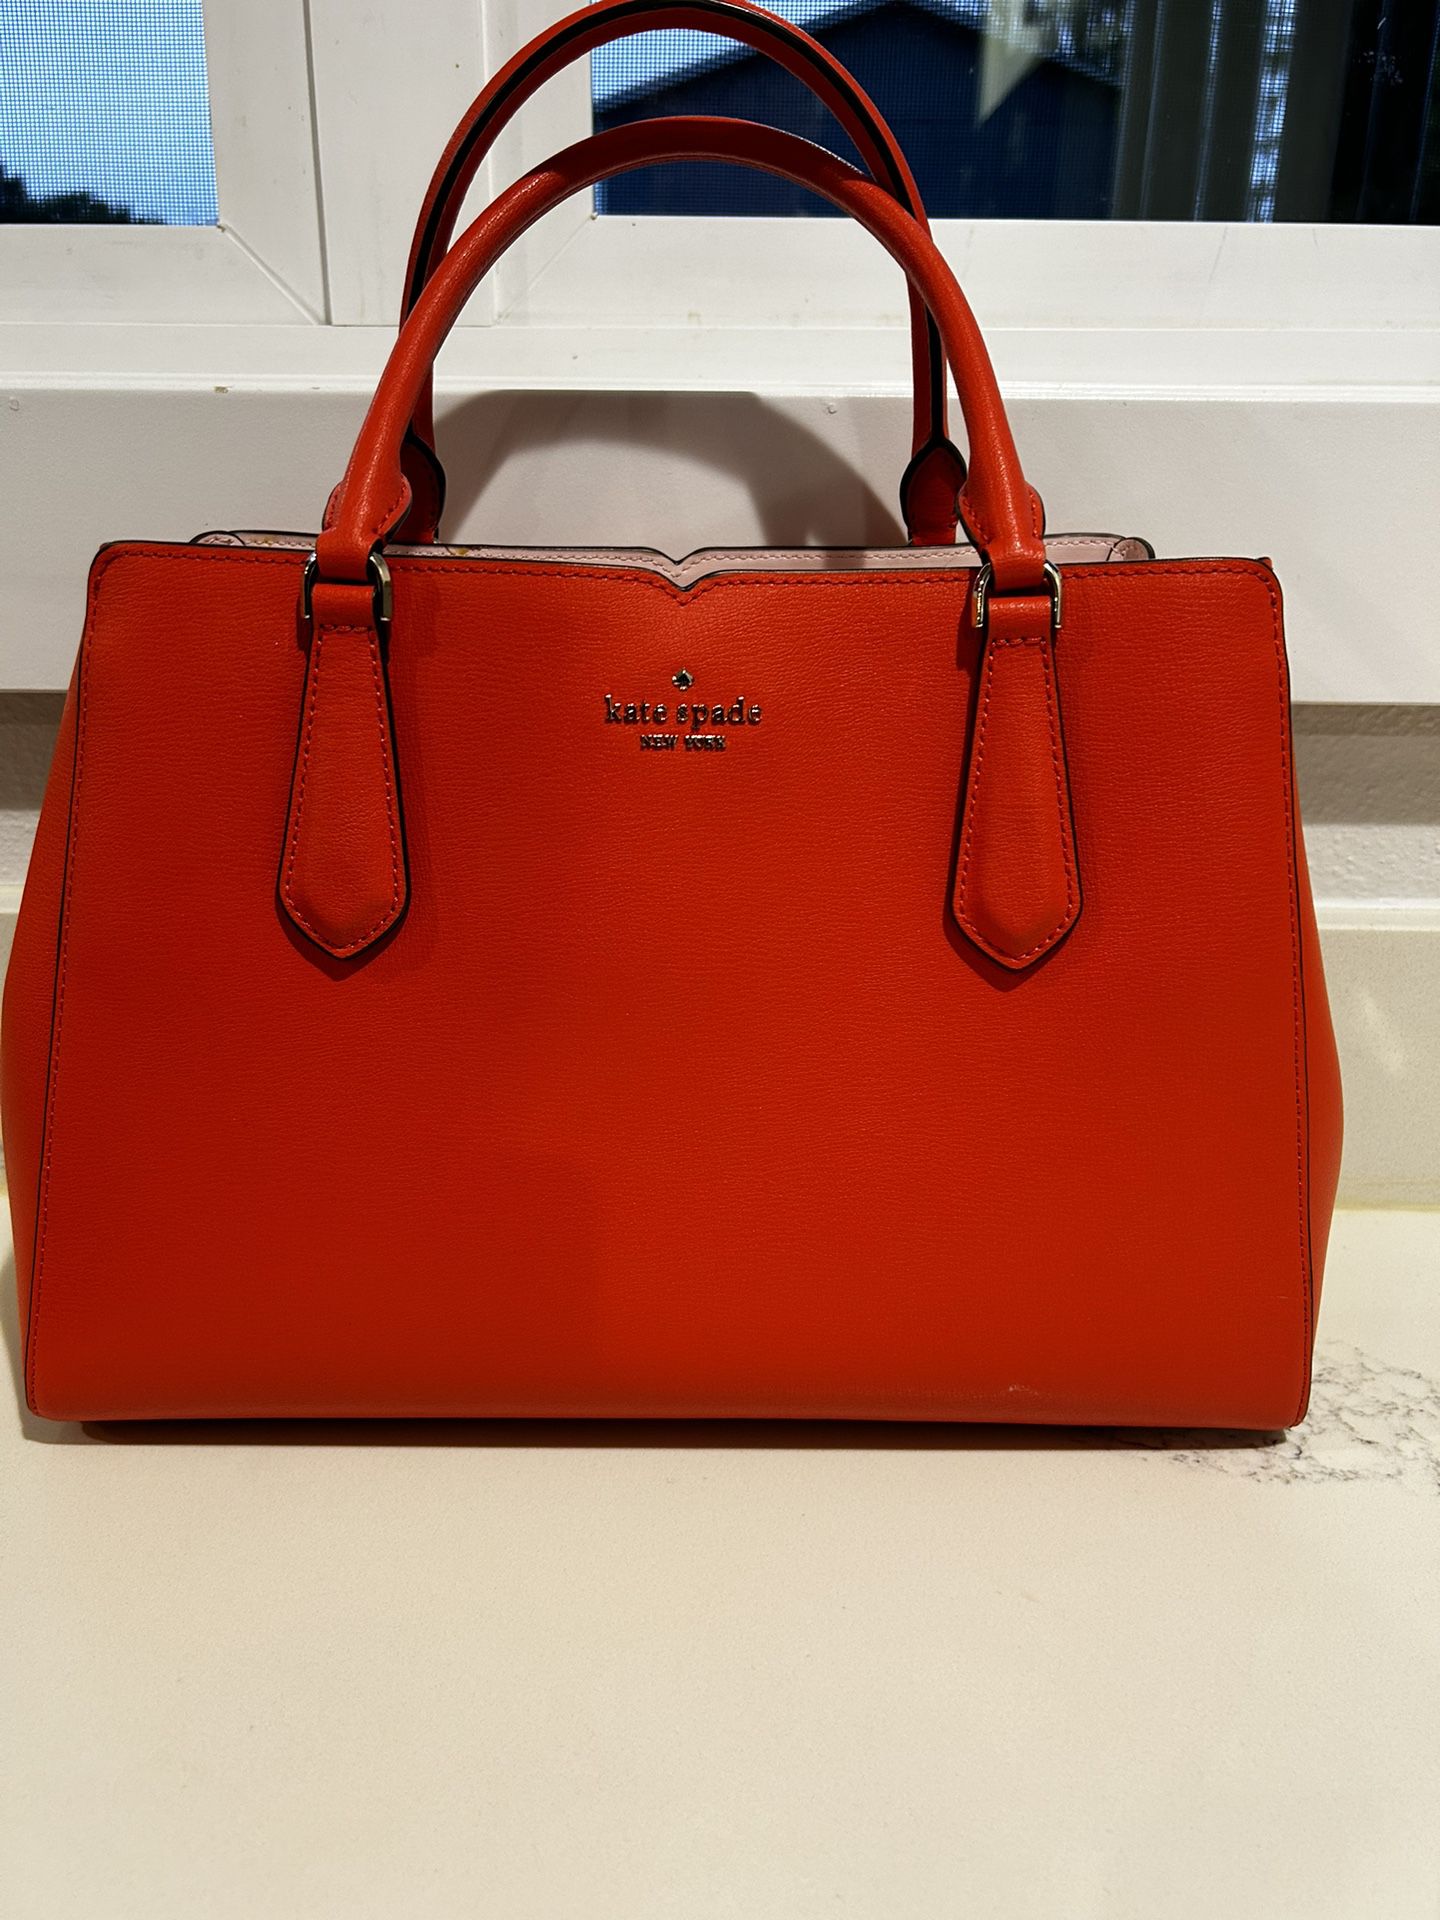 Kate Spade New York - Orange Handbag